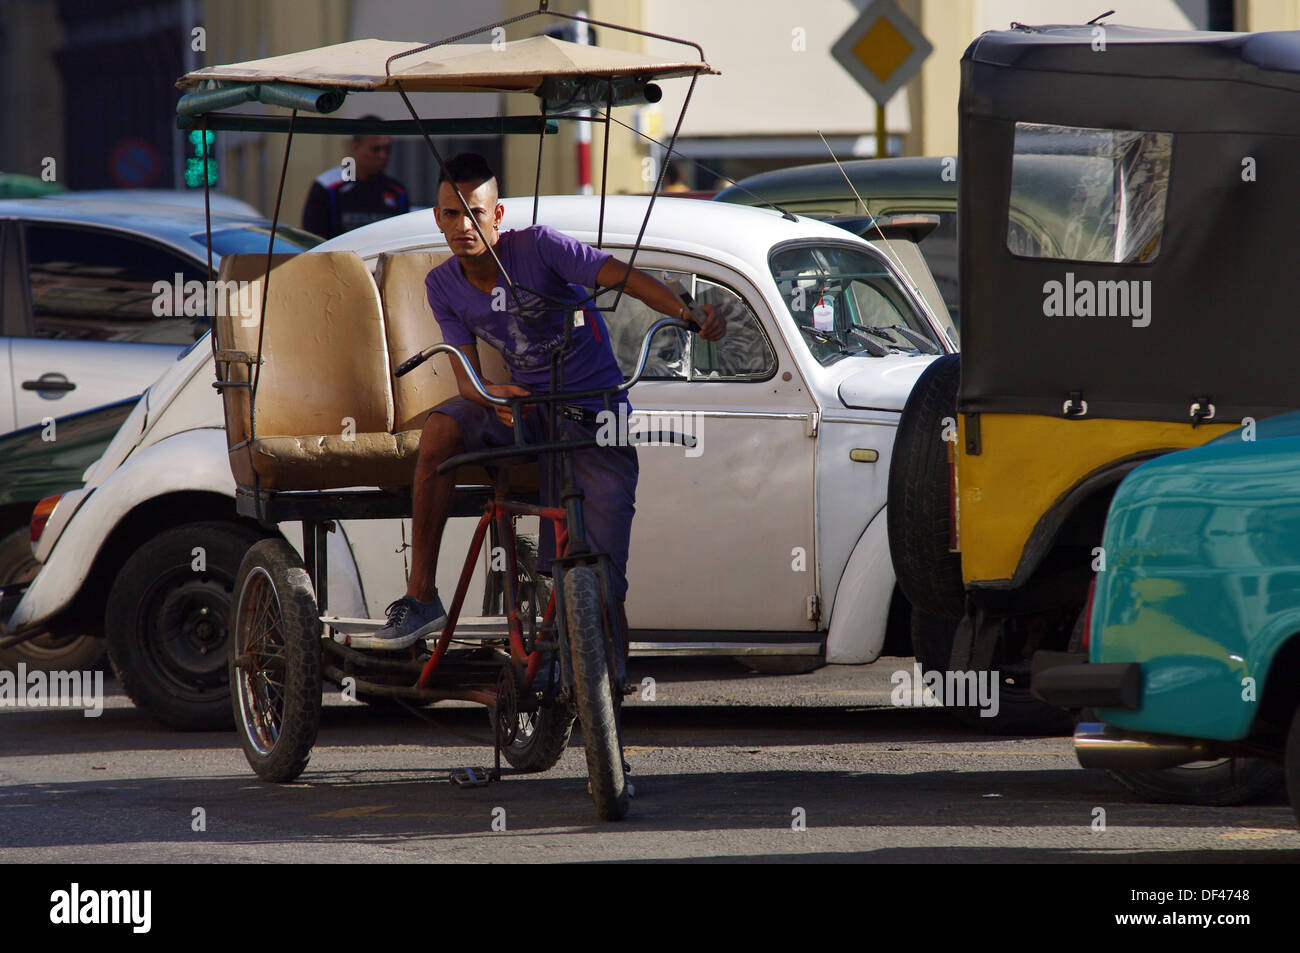 Bici-taxi driver in Old Havana, Cuba Stock Photo